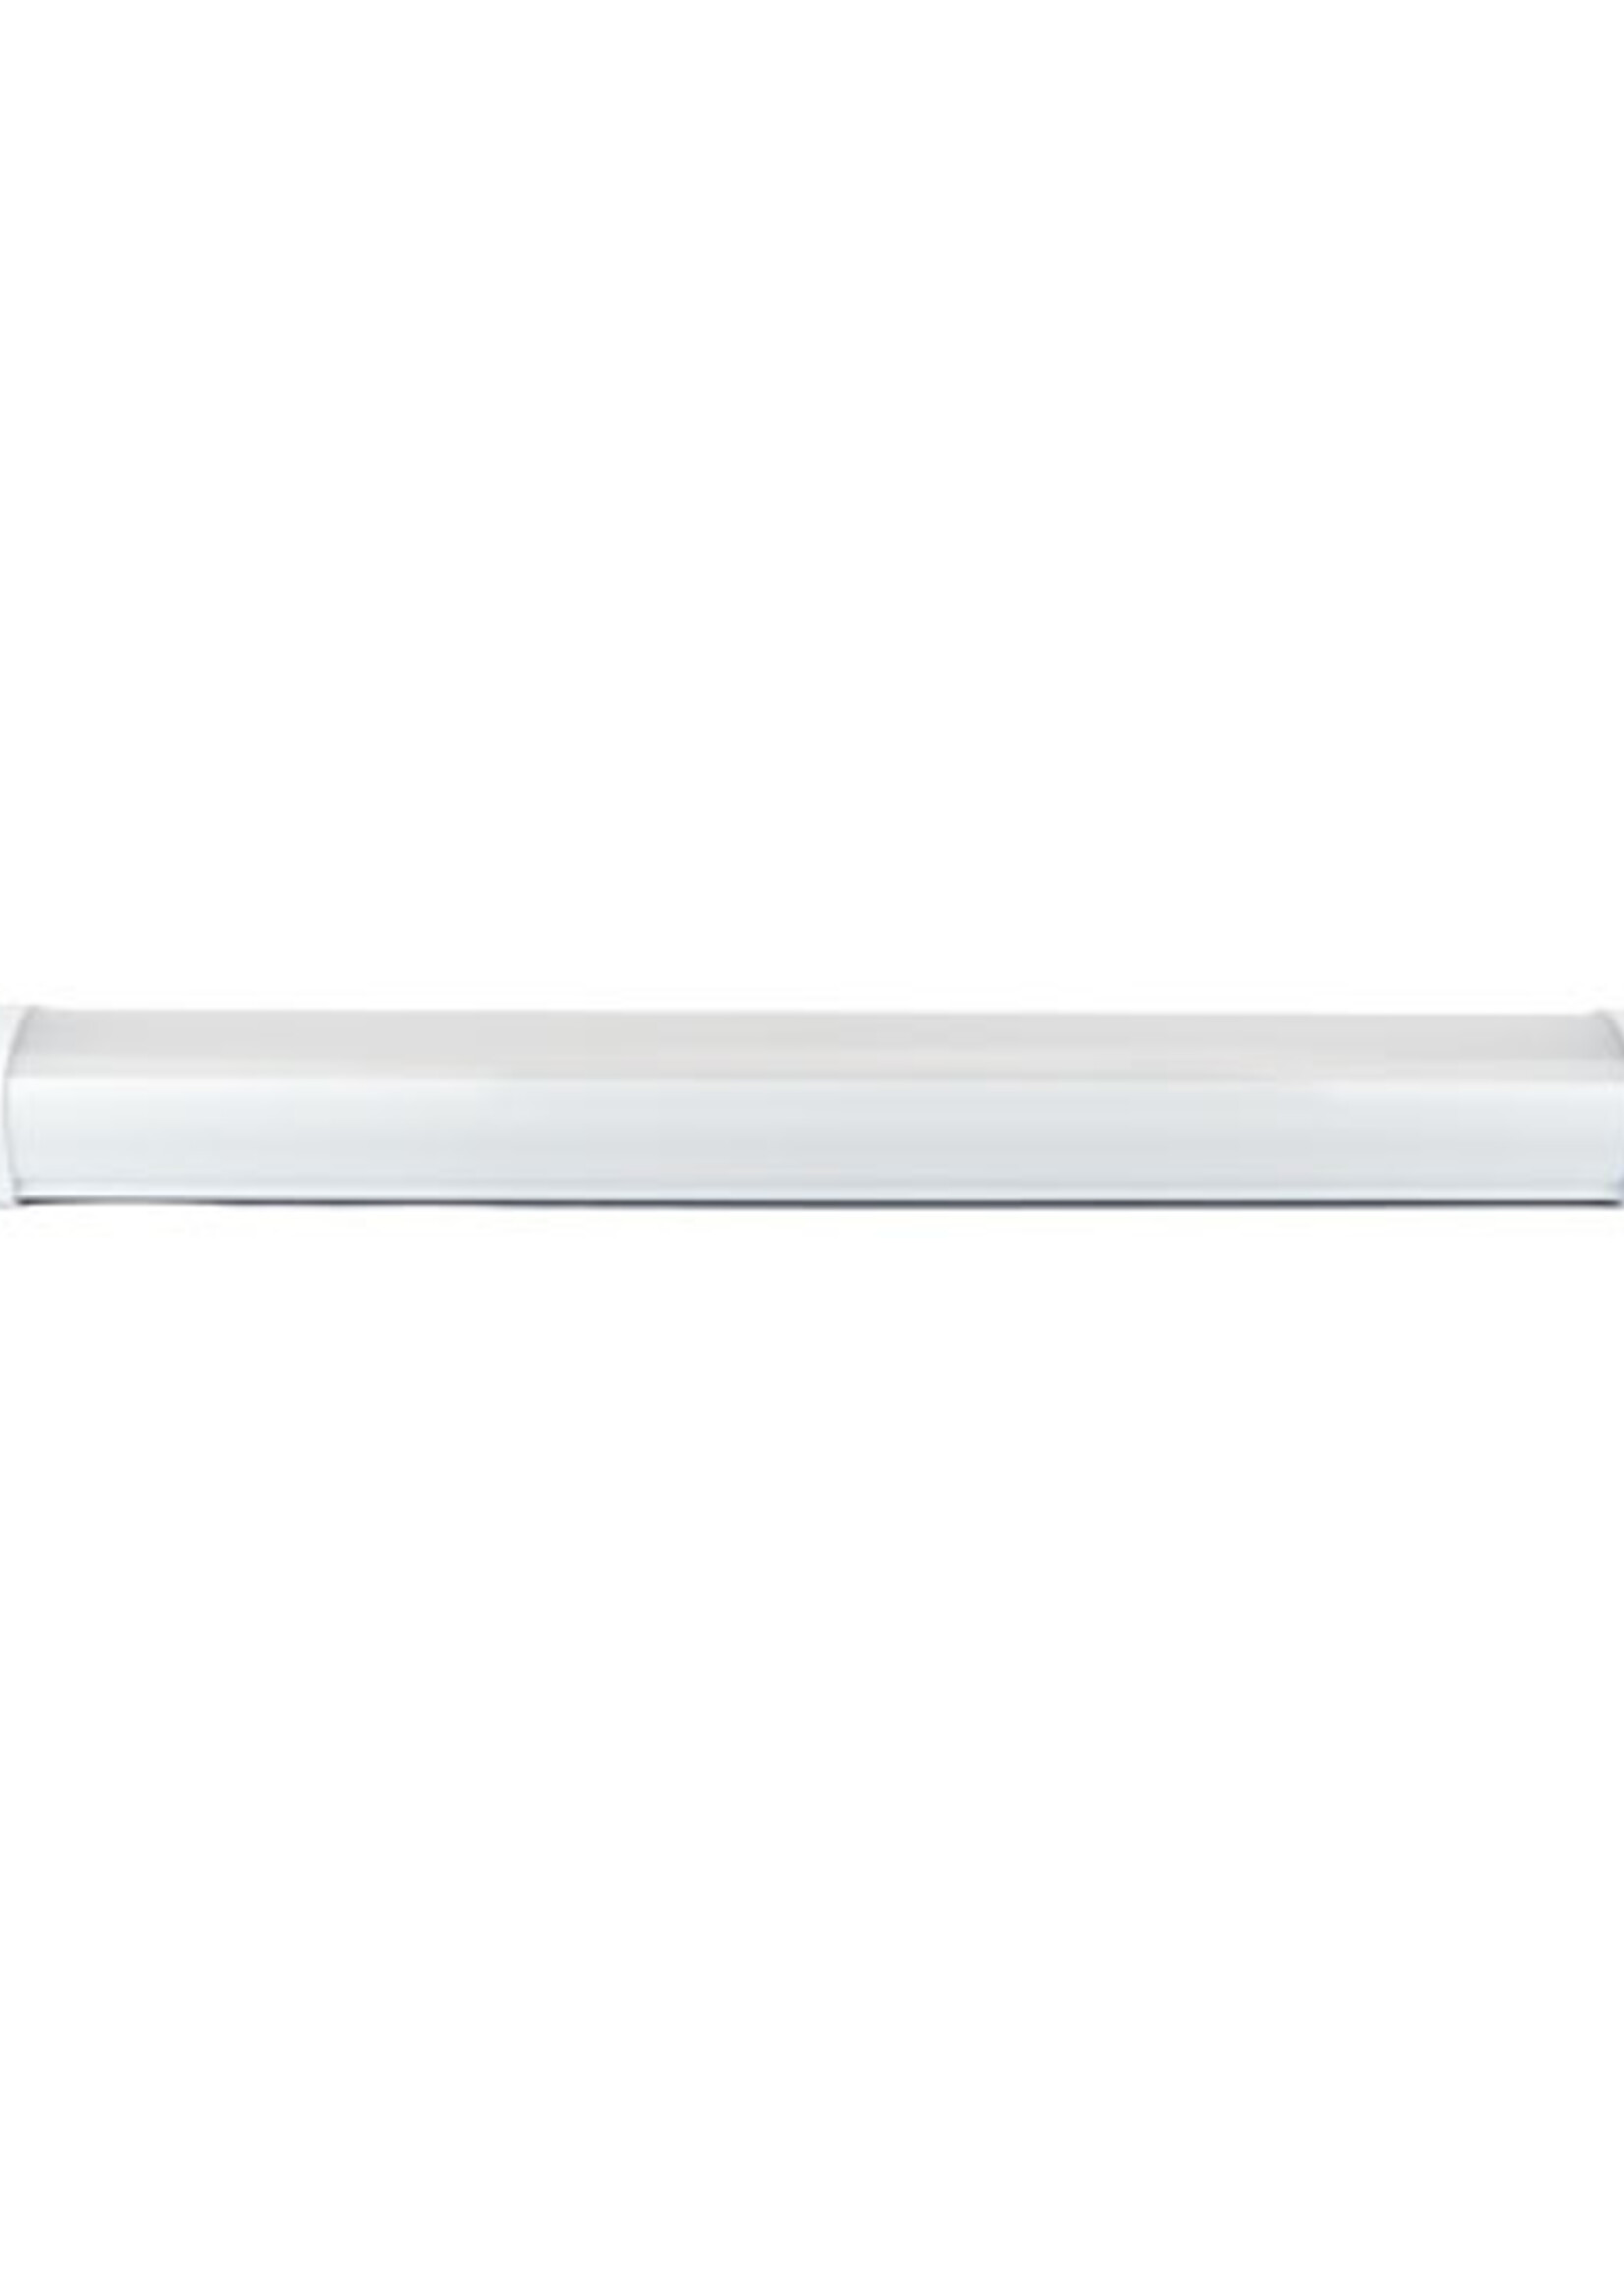 Philips CertaDrive Koppelbare LED Tri-proof IP65 waterbestendig 150cm 50W Philips-driver